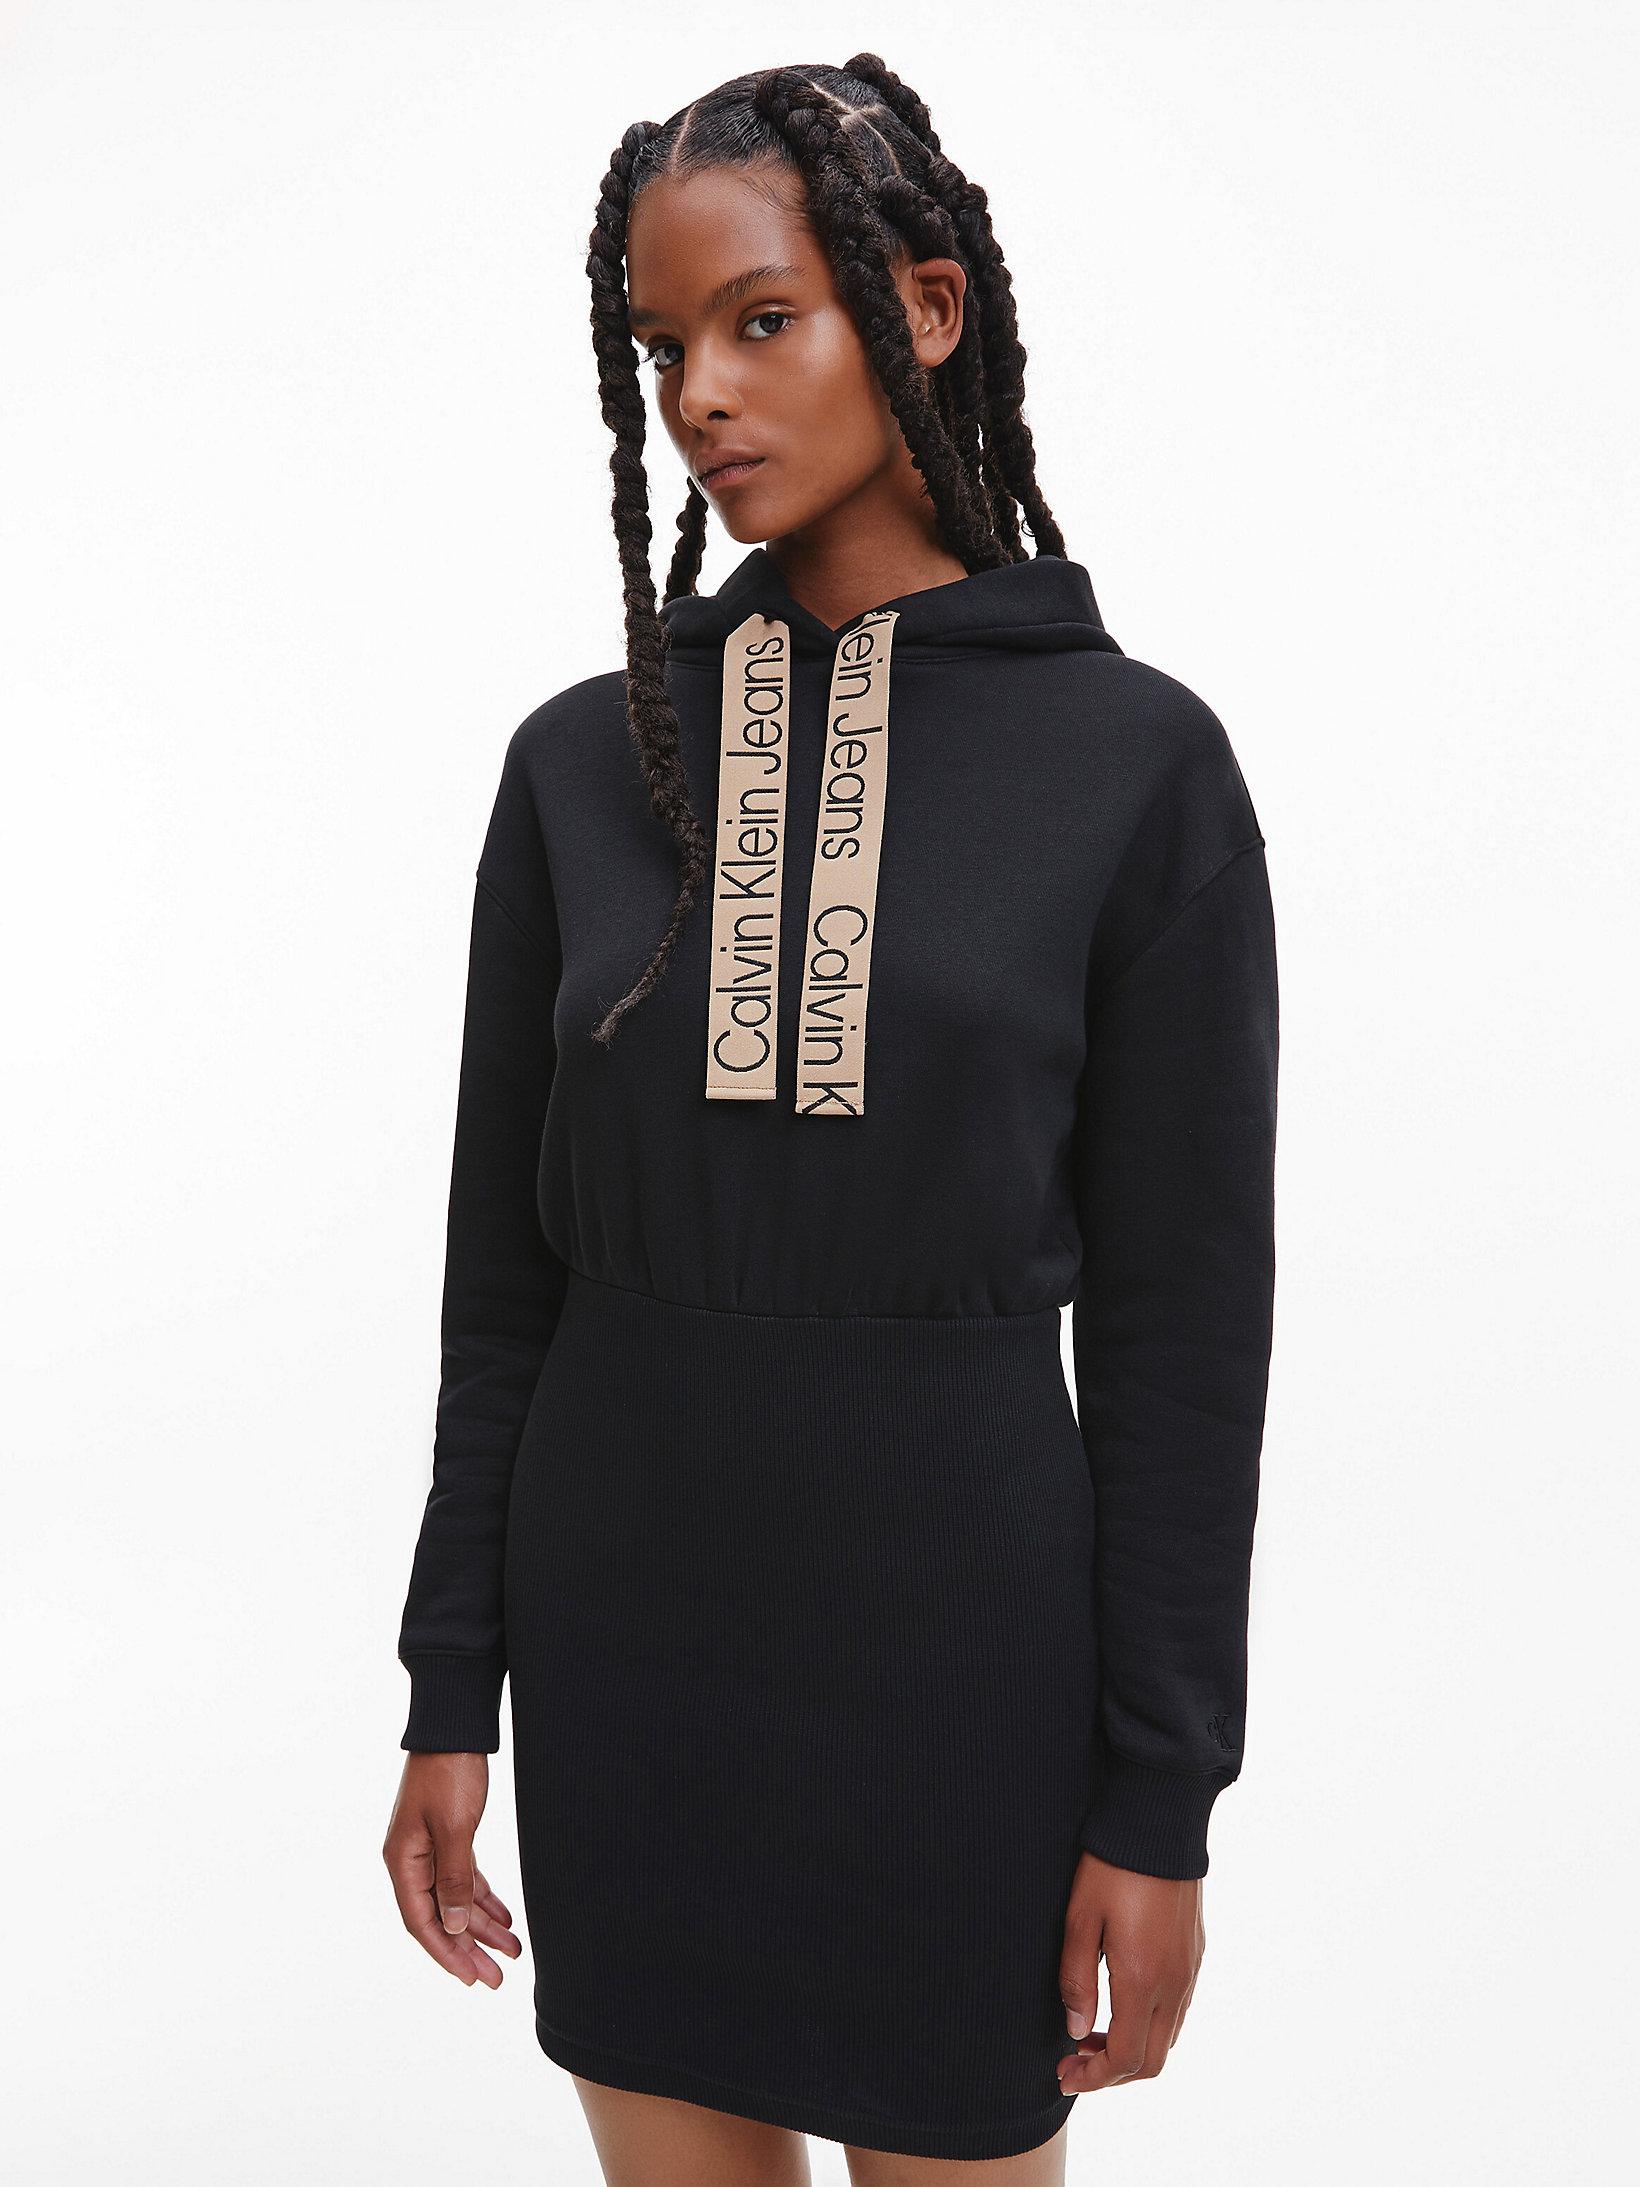 Dress Klein Hooded Sweatshirt in Tape | Lyst Calvin Logo UK Black